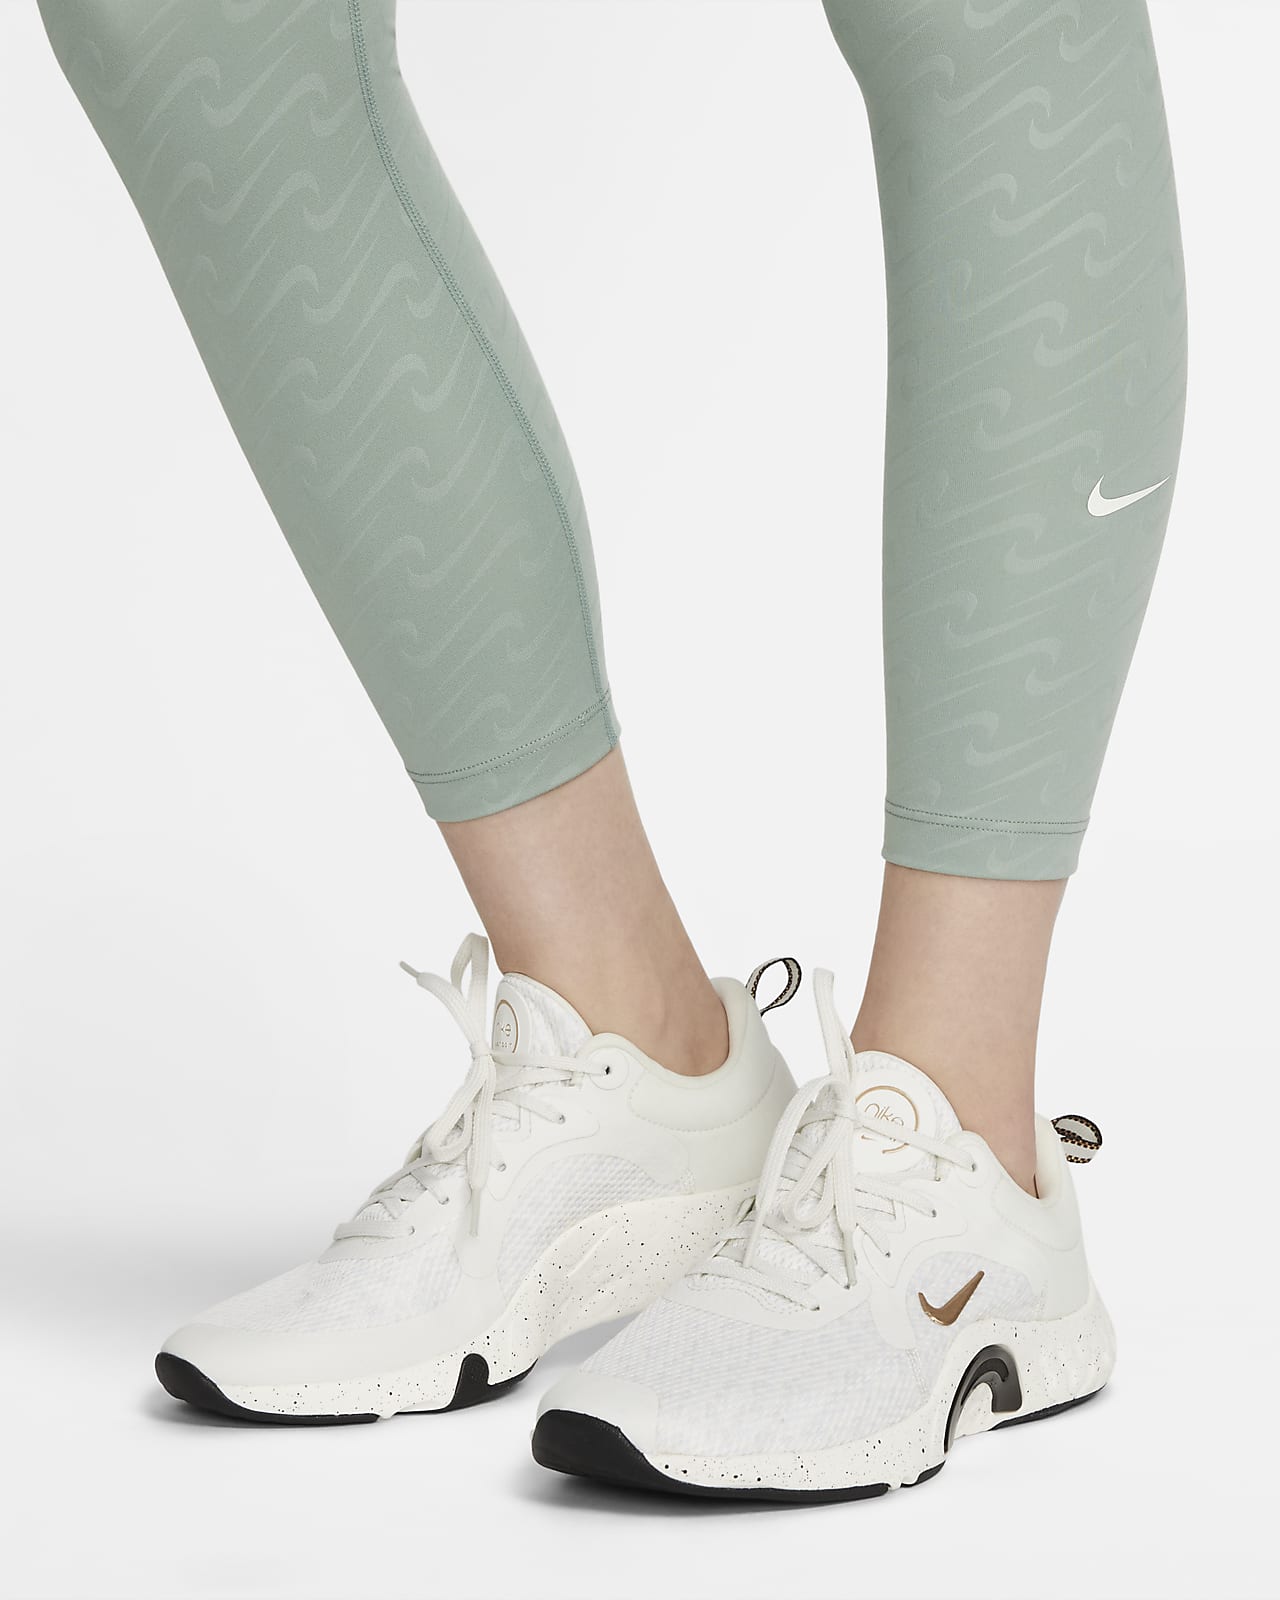 Nike Dri-Fit Icon Clash Mid-Rise Tight női futónadrág - Spur